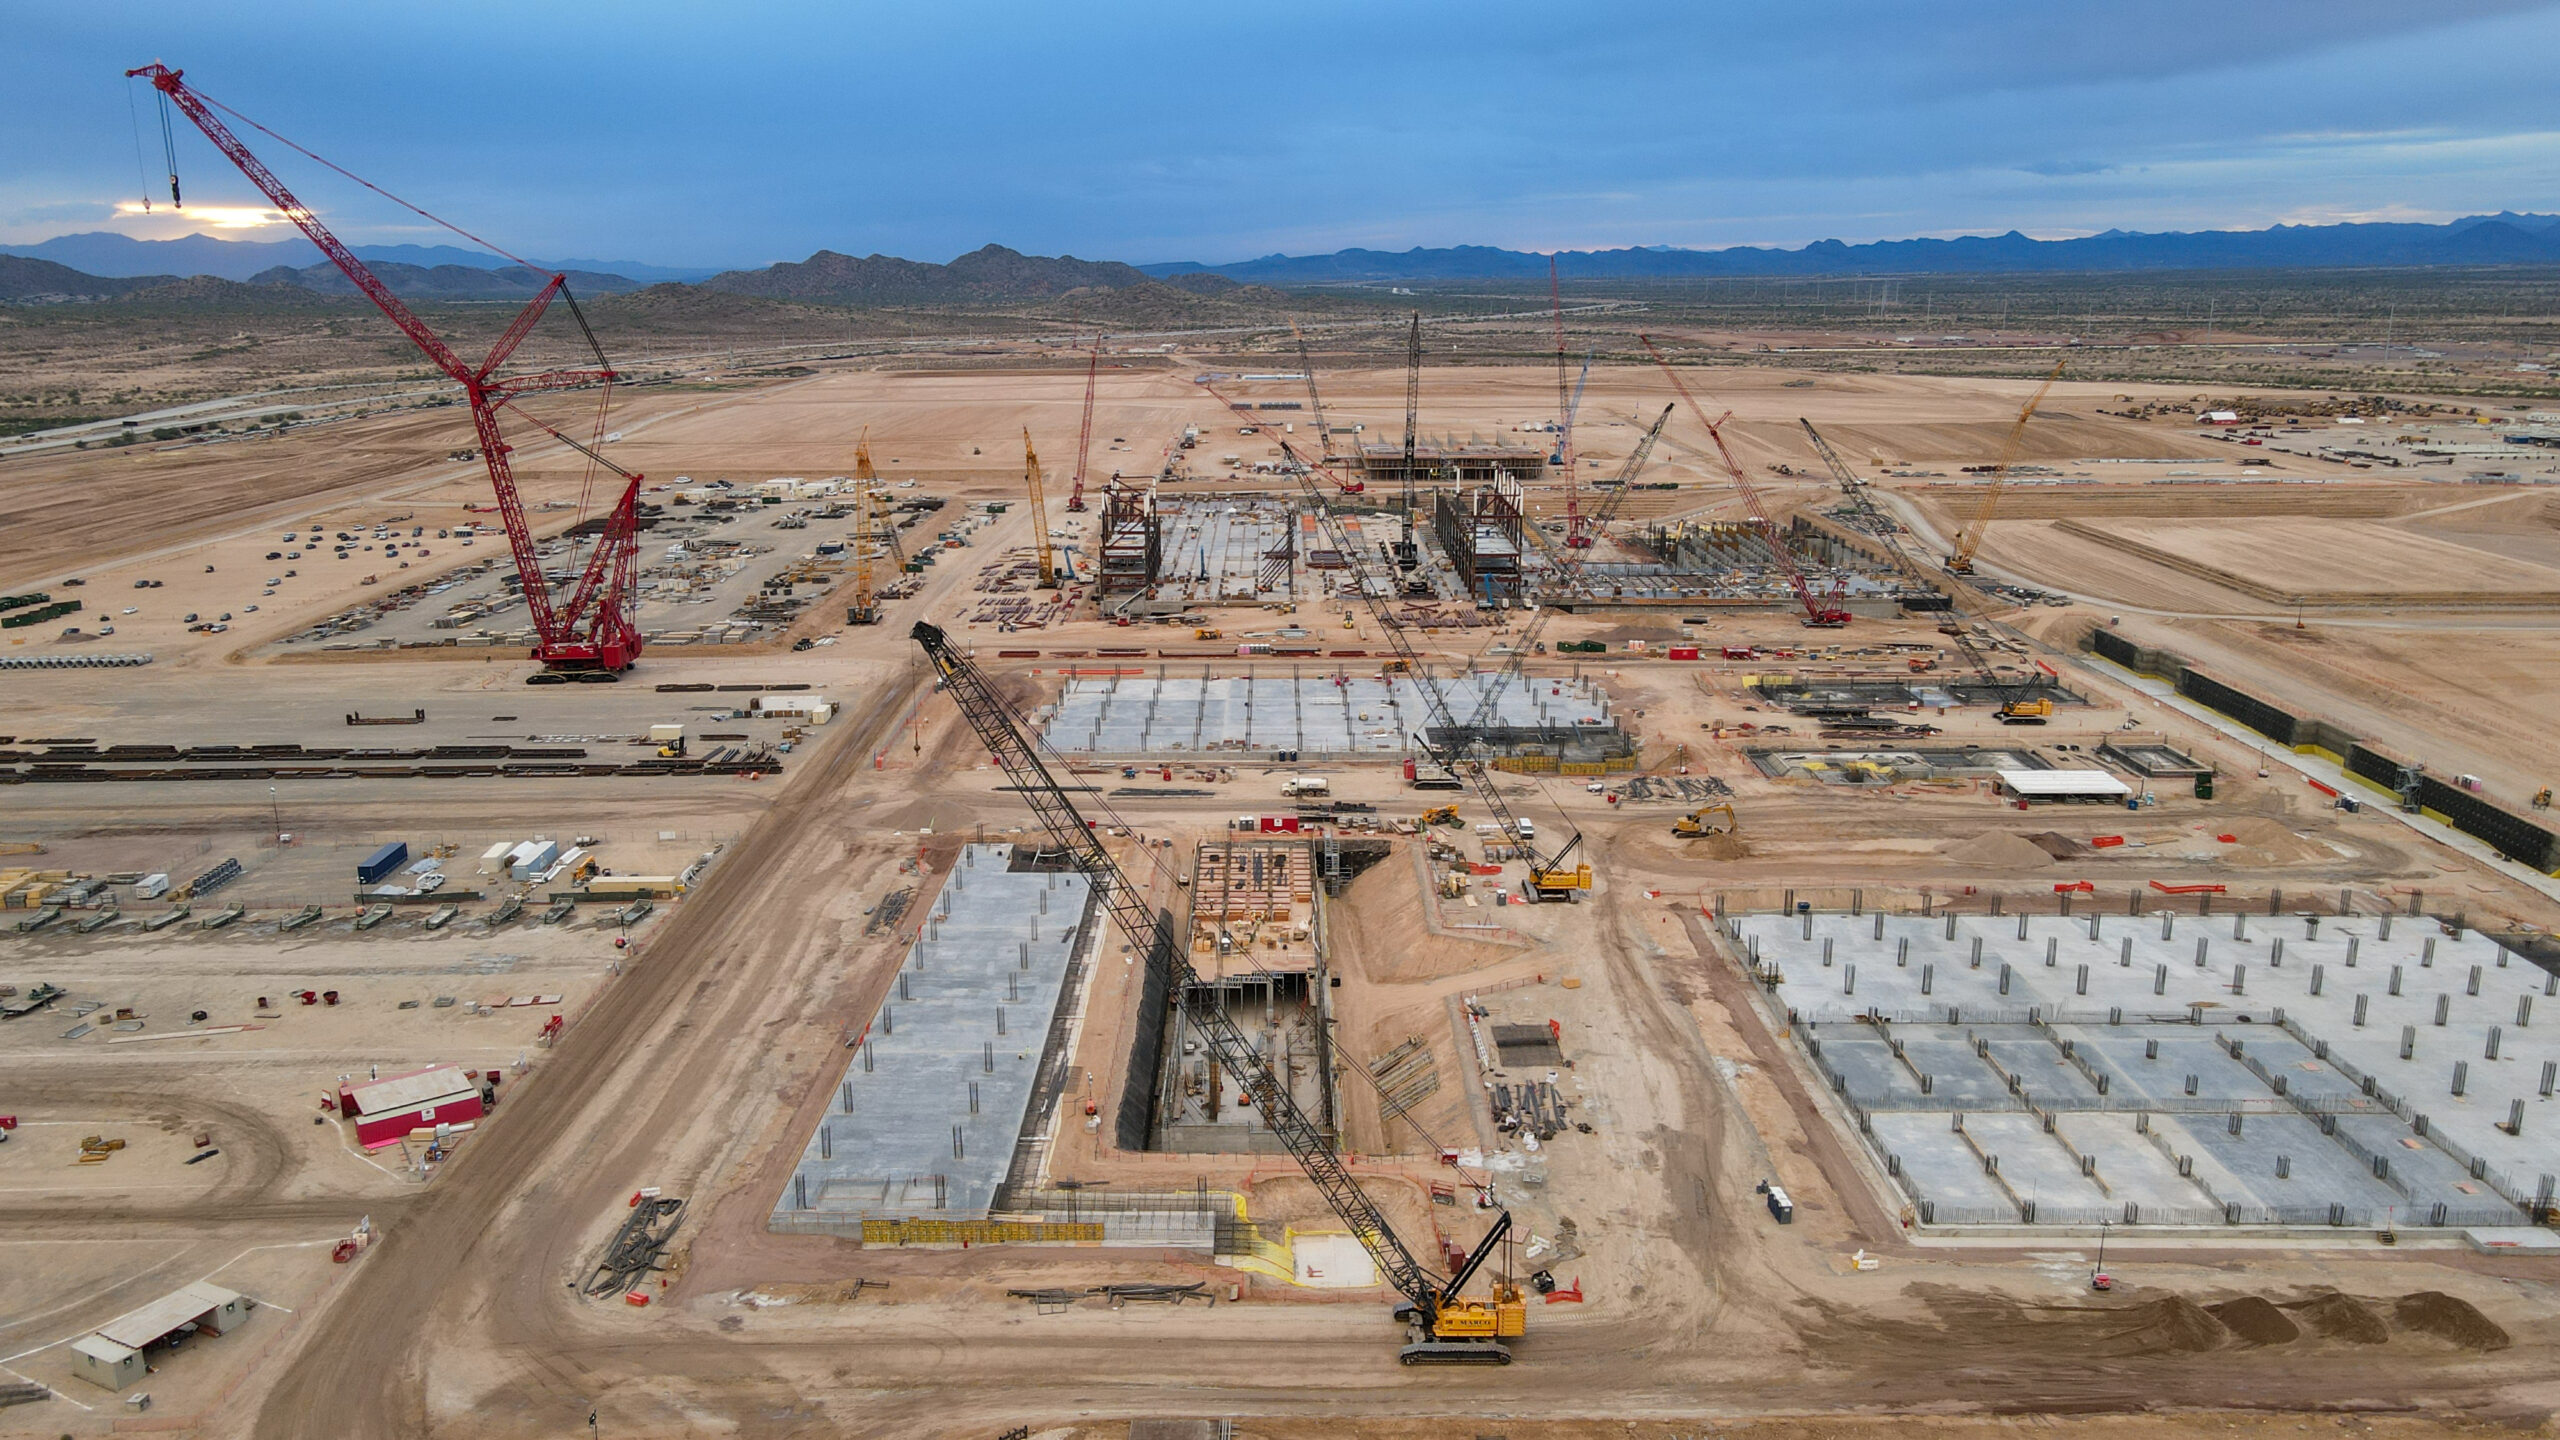 ZELUS New Construction show case at TSMC in Phoenix, Arizona